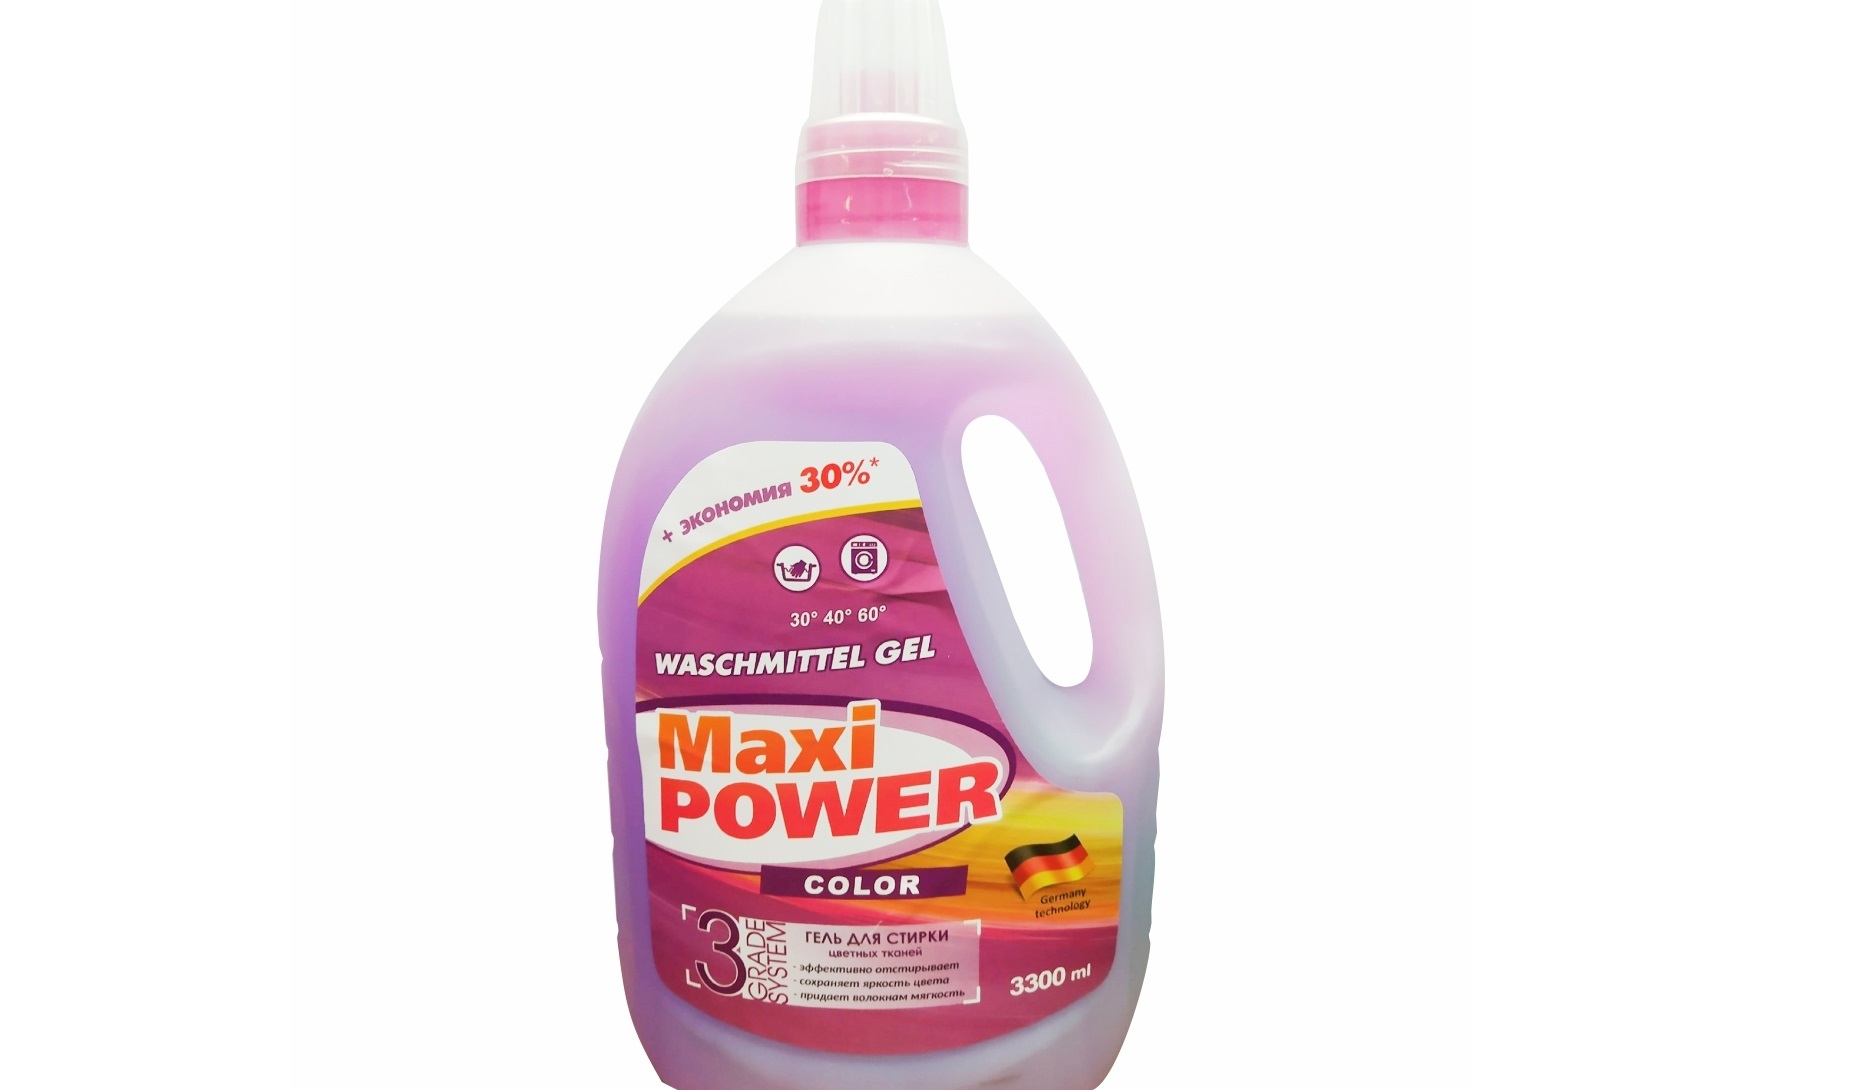 Maxi-Power-Farbe